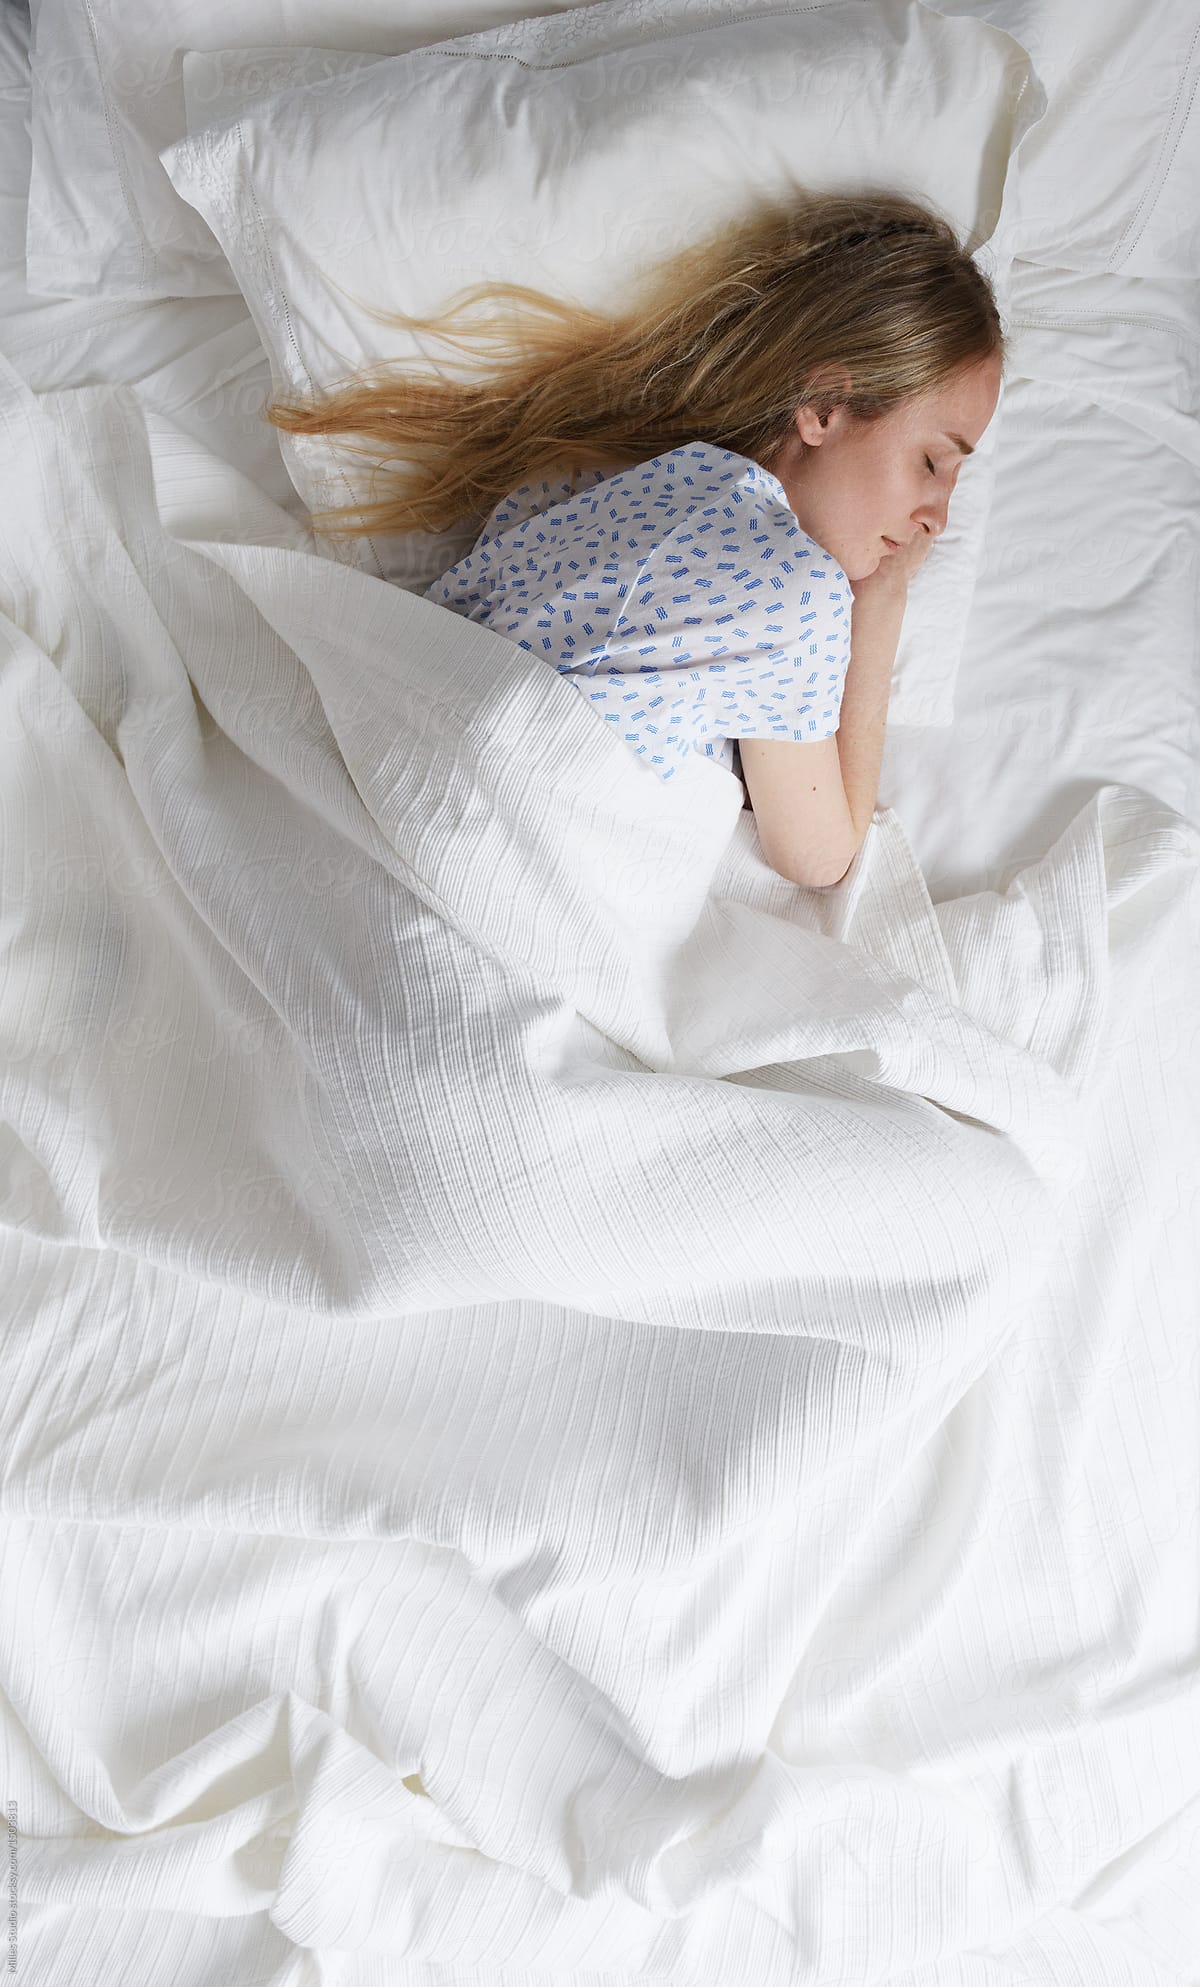 Pretty Woman Sleeping In Bed by Stocksy Contributor Milles Studio -  Stocksy